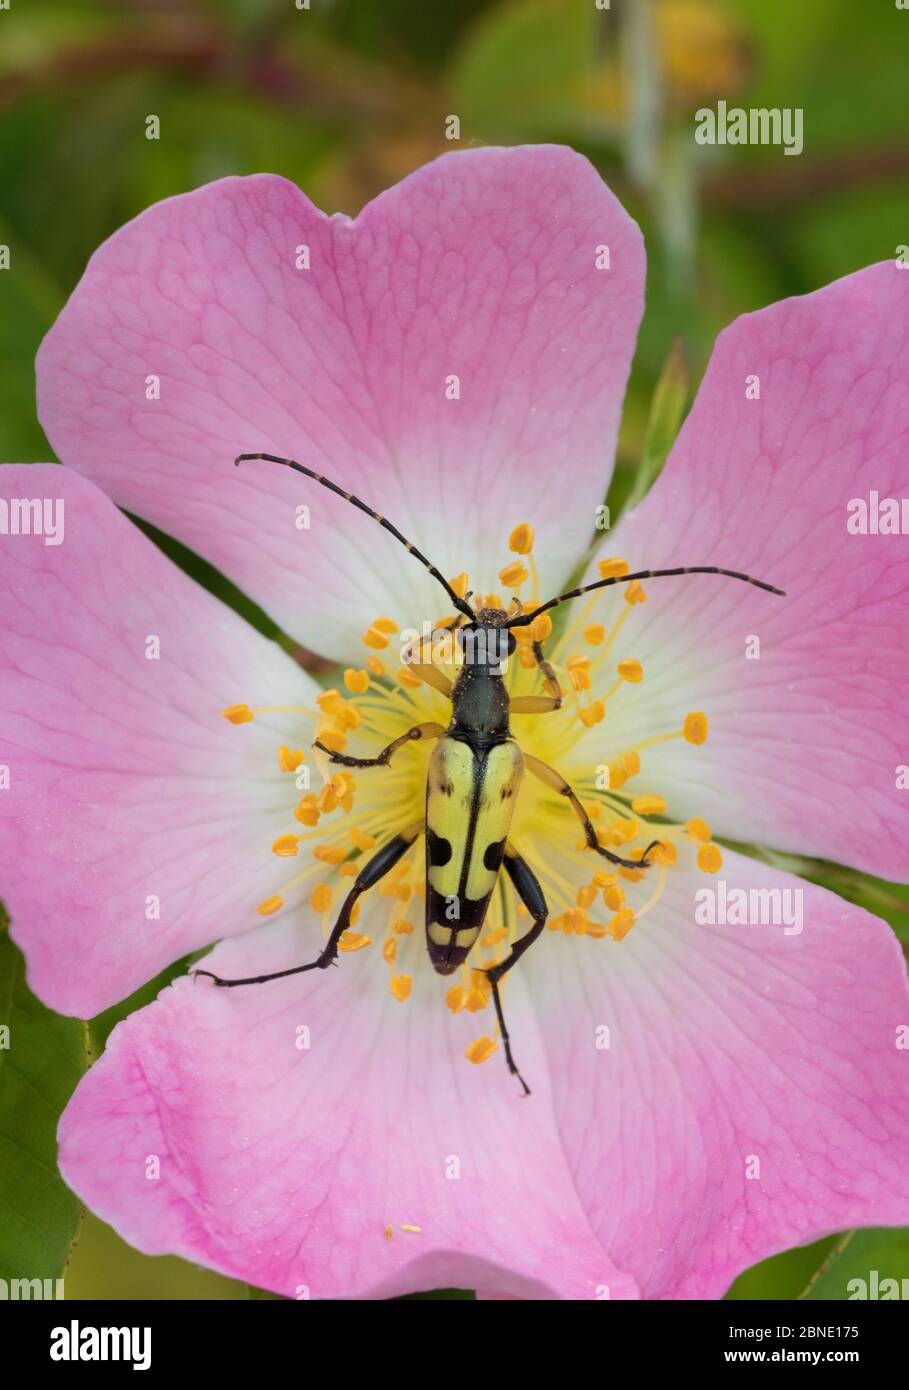 Longhorn beetle (Rutpela / Strangalia maculata) feeding on Dog rose flower, Hutchinson's Bank, New Addington, London, England, June. Stock Photo